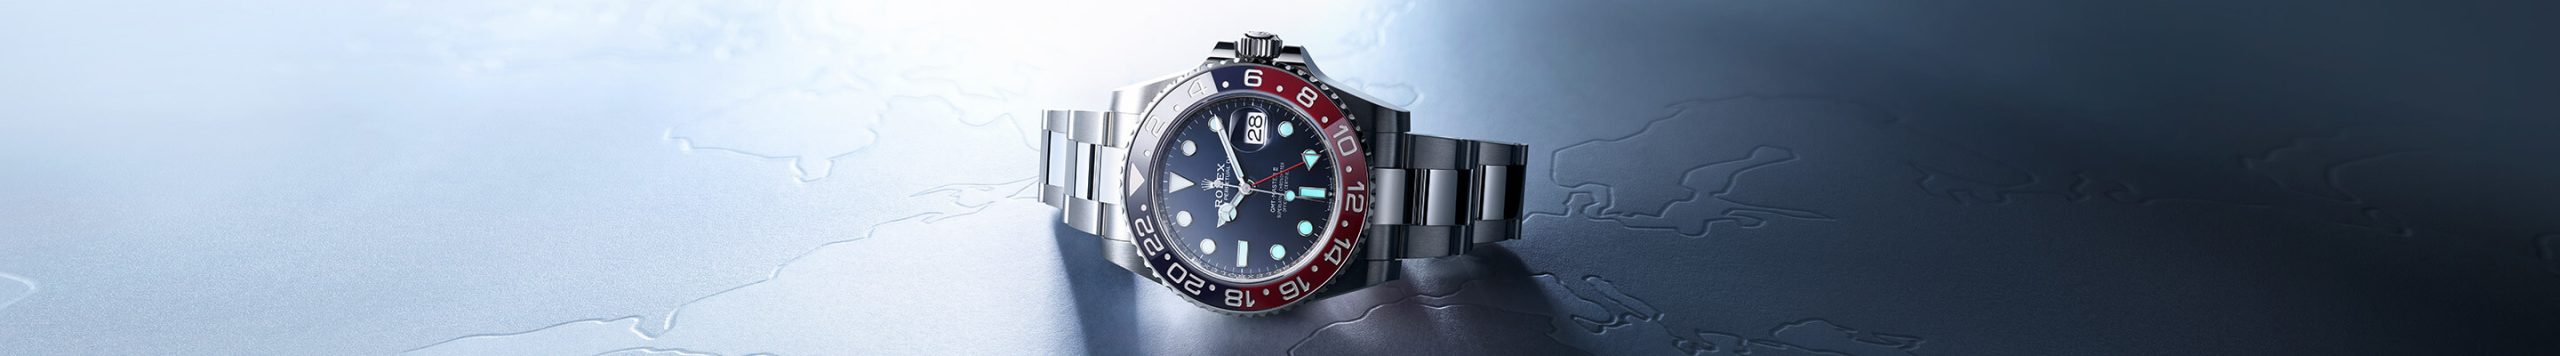 Rolex_GMT Master II_m126719blro-0003_Cortina Watch